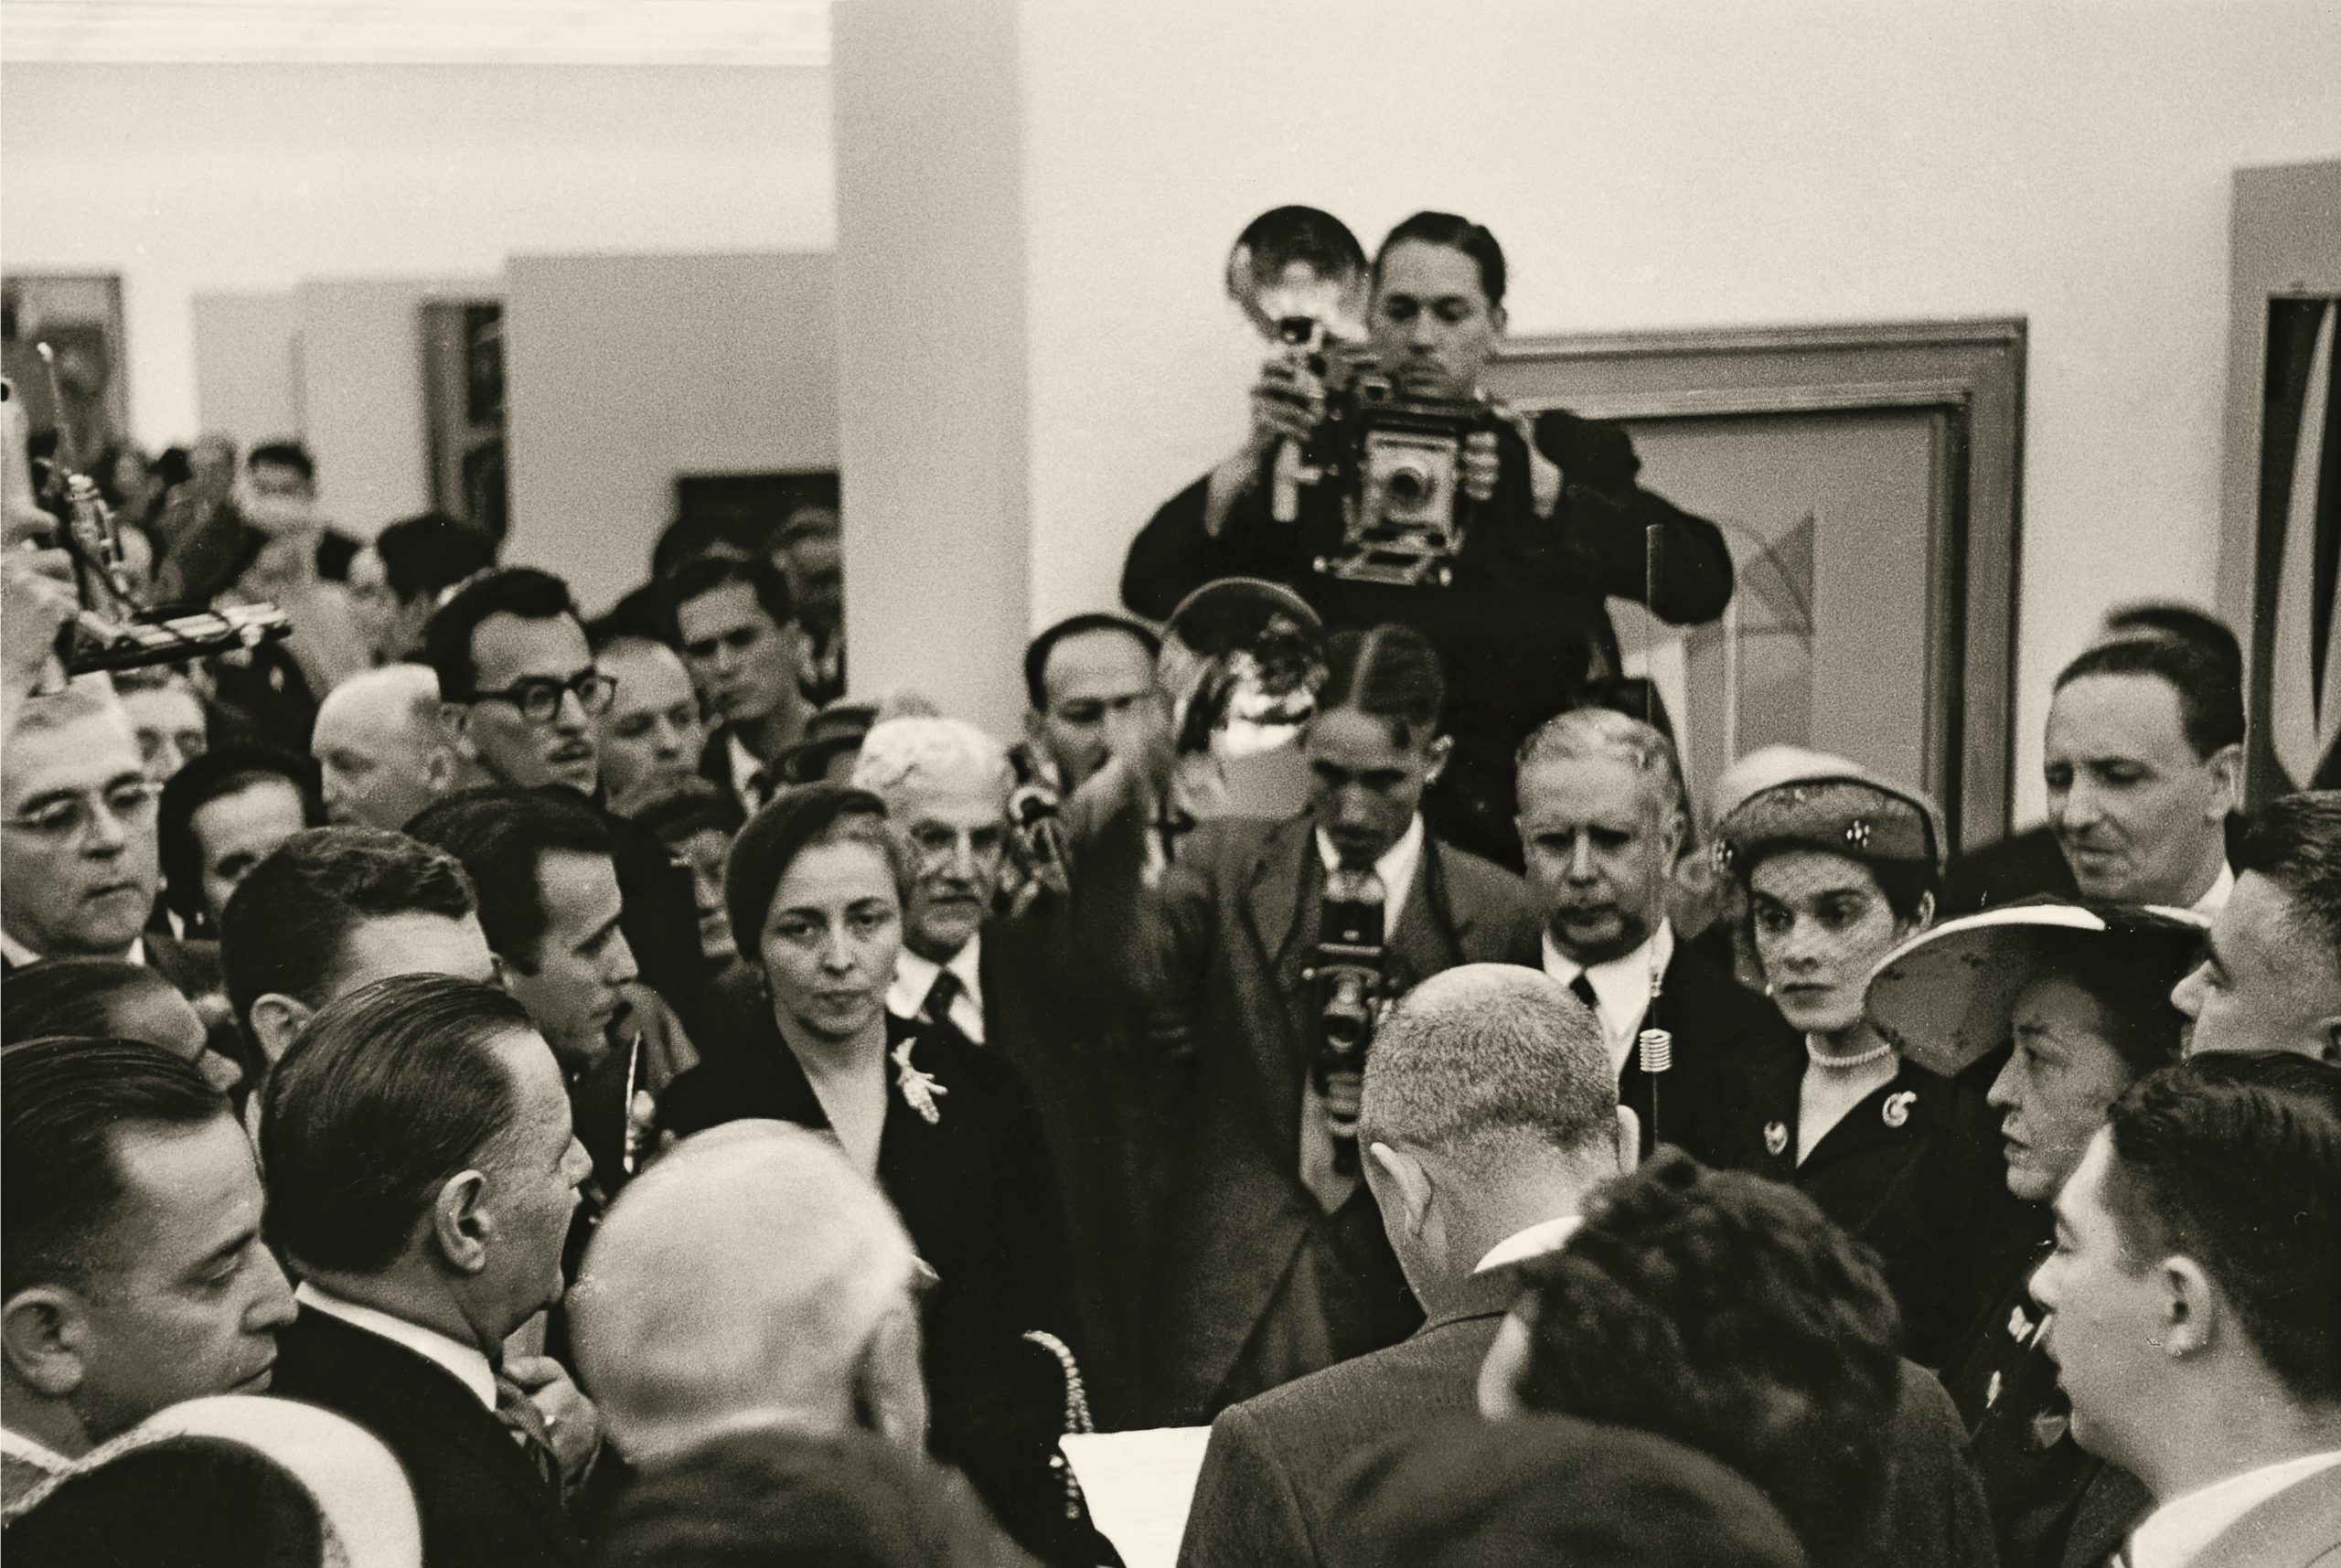 Francisco Matarazzo Sobrinho's speech at the opening on the 1st  Bienal, 1951. With him, Yolanda Penteado, Carmelita Leme Garcez, Darcy Vargas and Lucas Nogueira Garcez.